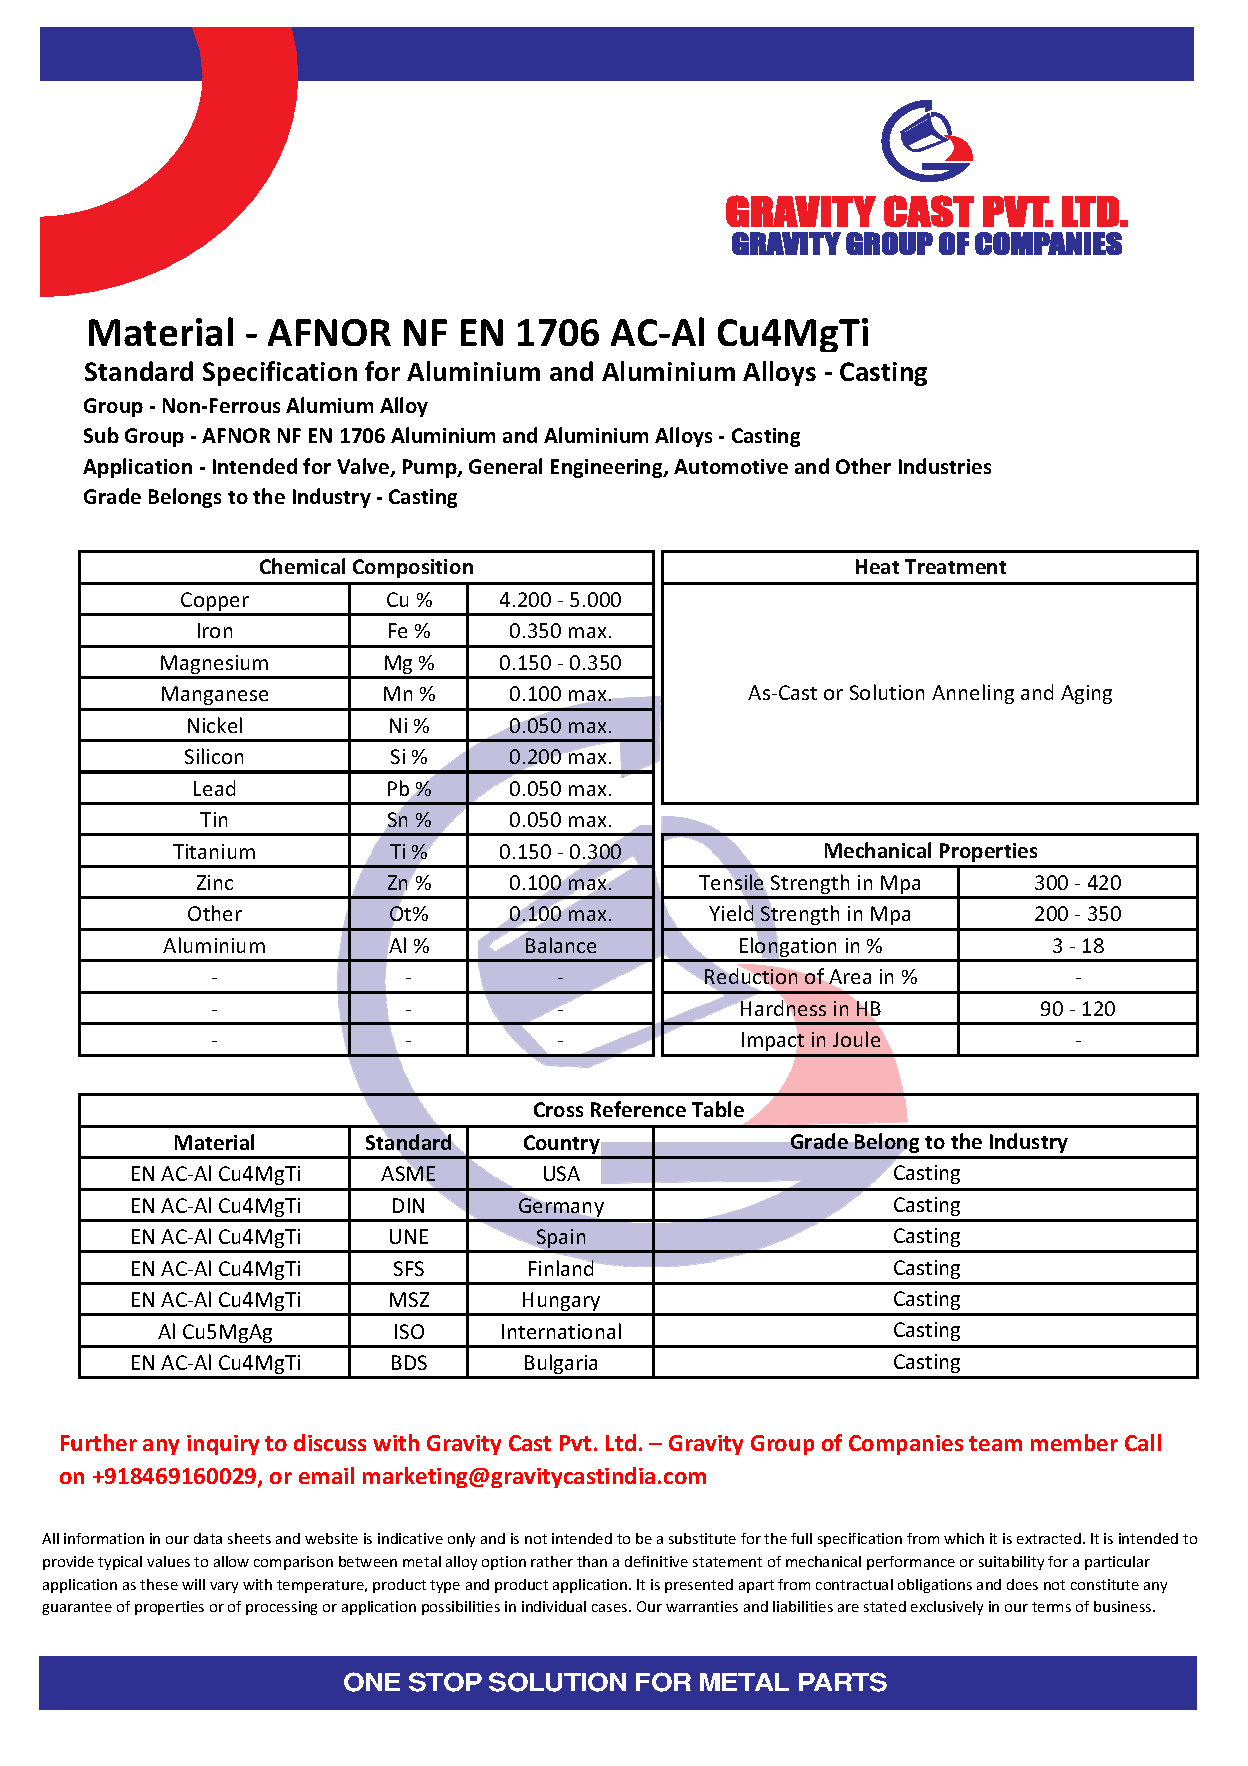 AFNOR NF EN 1706 AC-Al Cu4MgTi.pdf